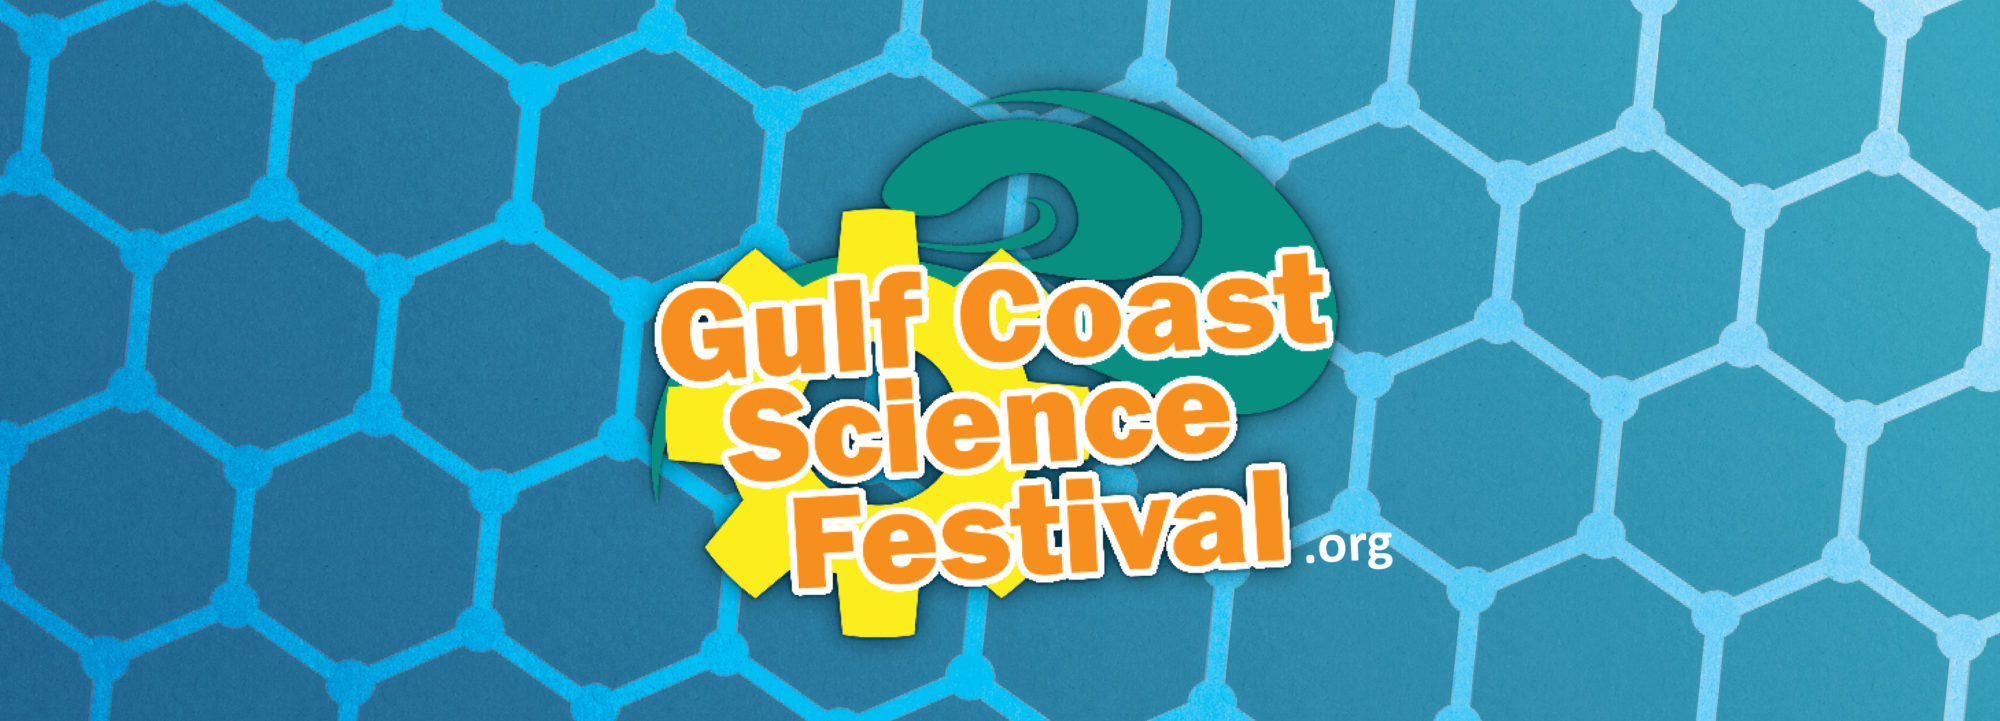 Gulf Coast Science Festival